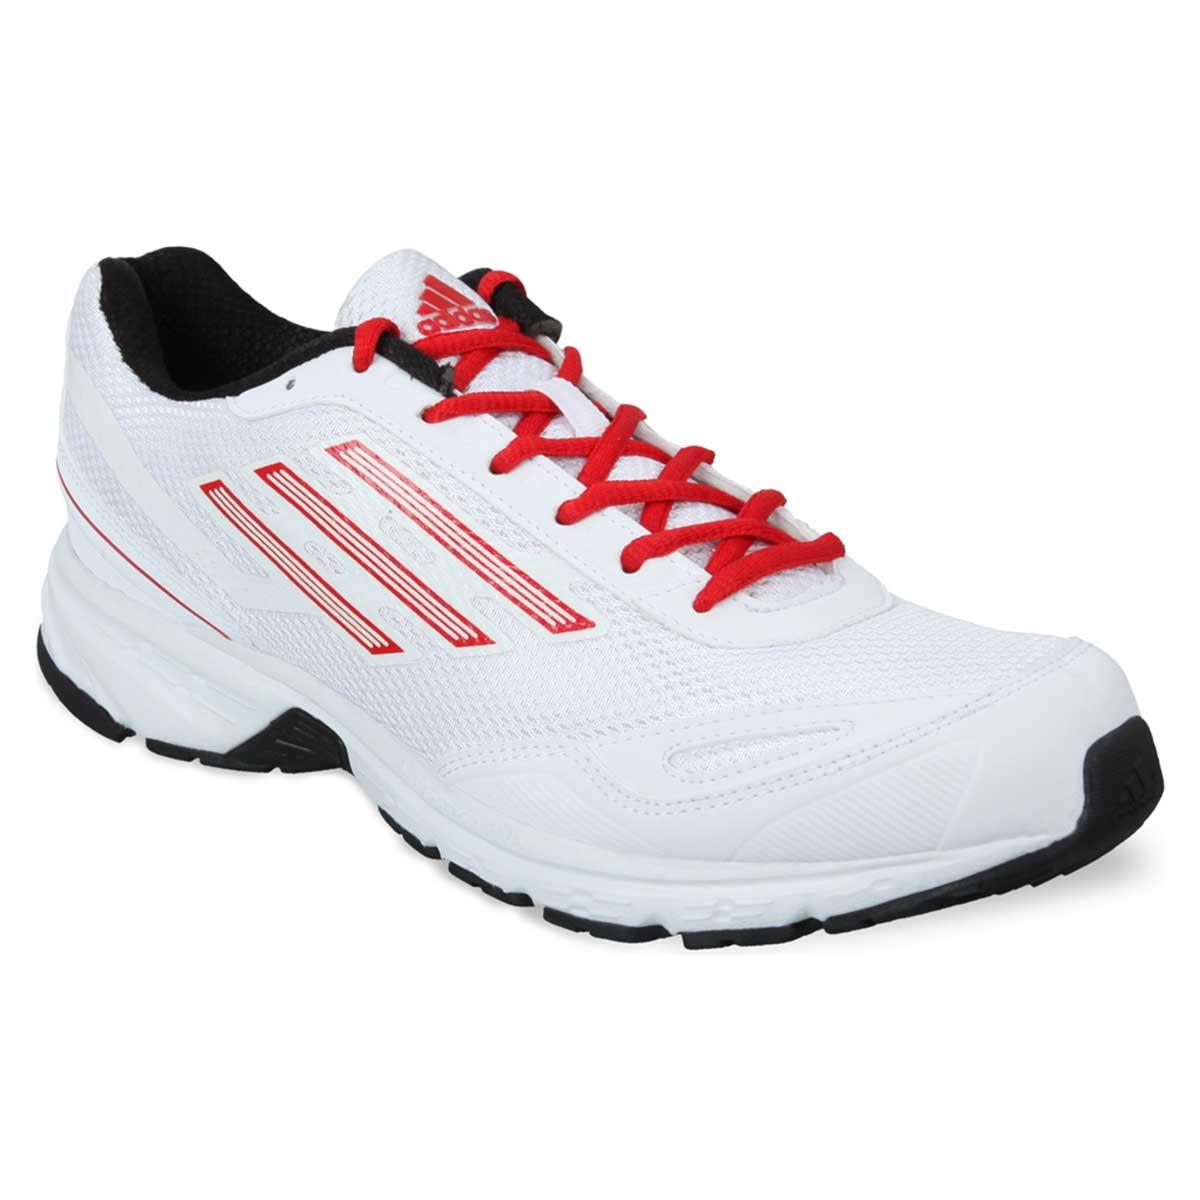 Buy Adidas Lite Primo Running Shoes (White/Black/Scarle) Online